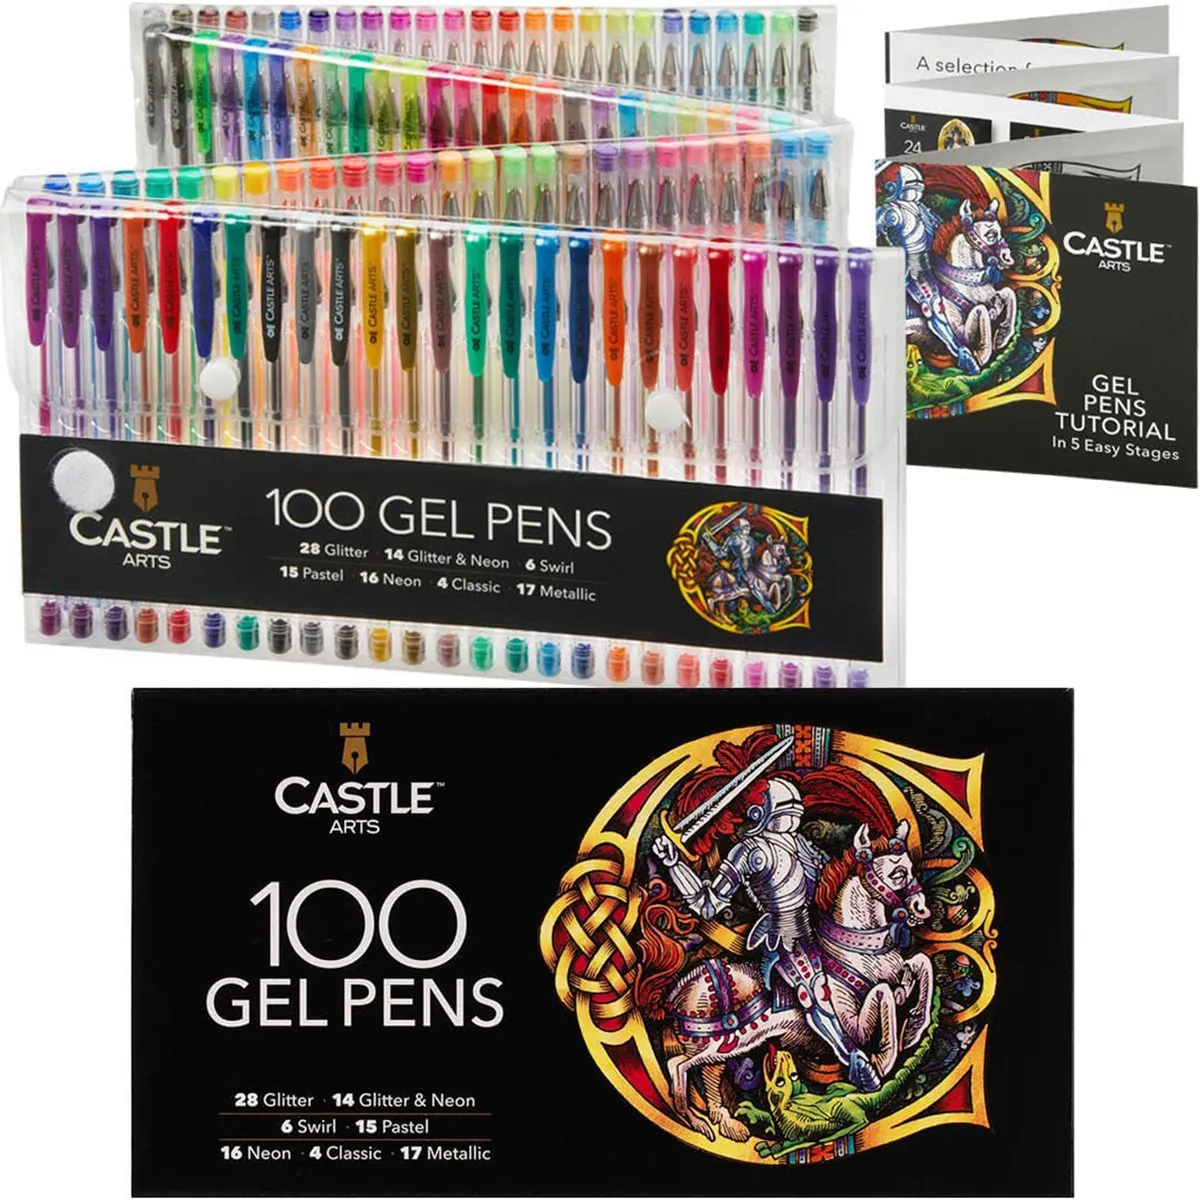 Glitter Gel Ink Pen 16 Assorted Color Retractable Gel Pen Set 0.7mm Fine  Tip Colored Journaling Pen Coloring Drawing